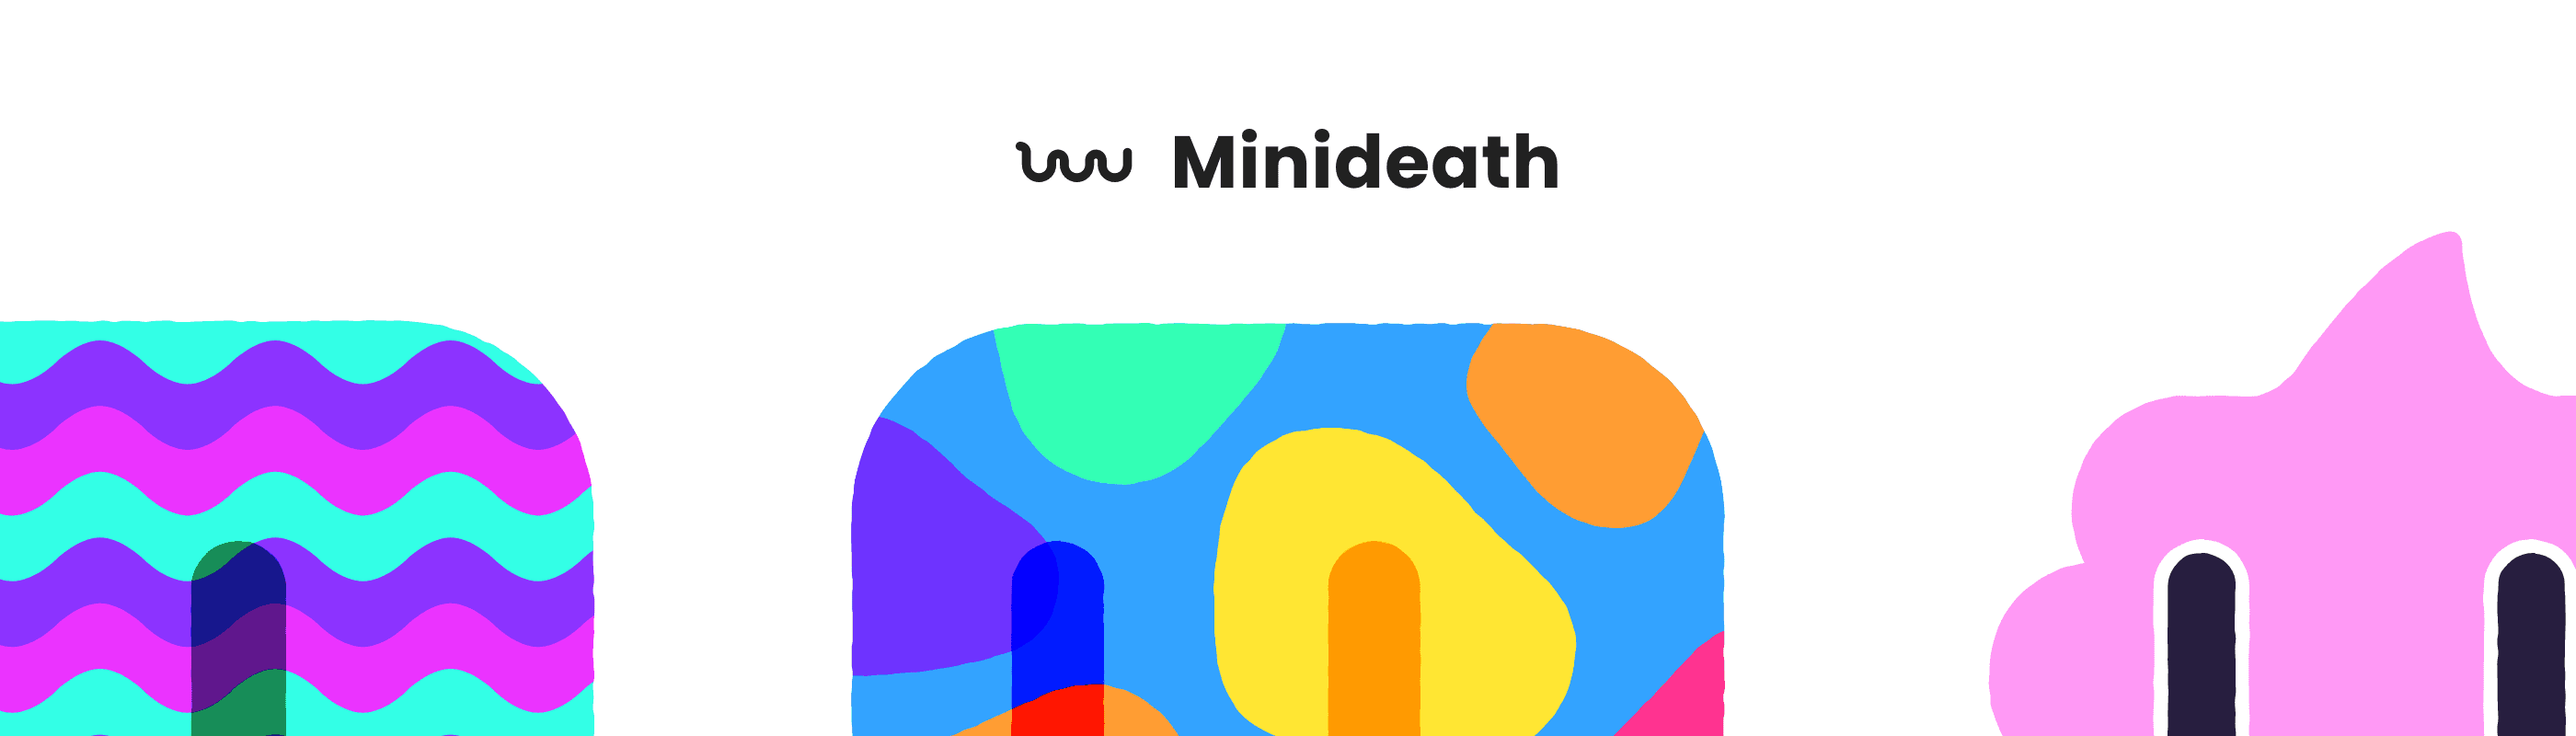 Minideath-creator banner